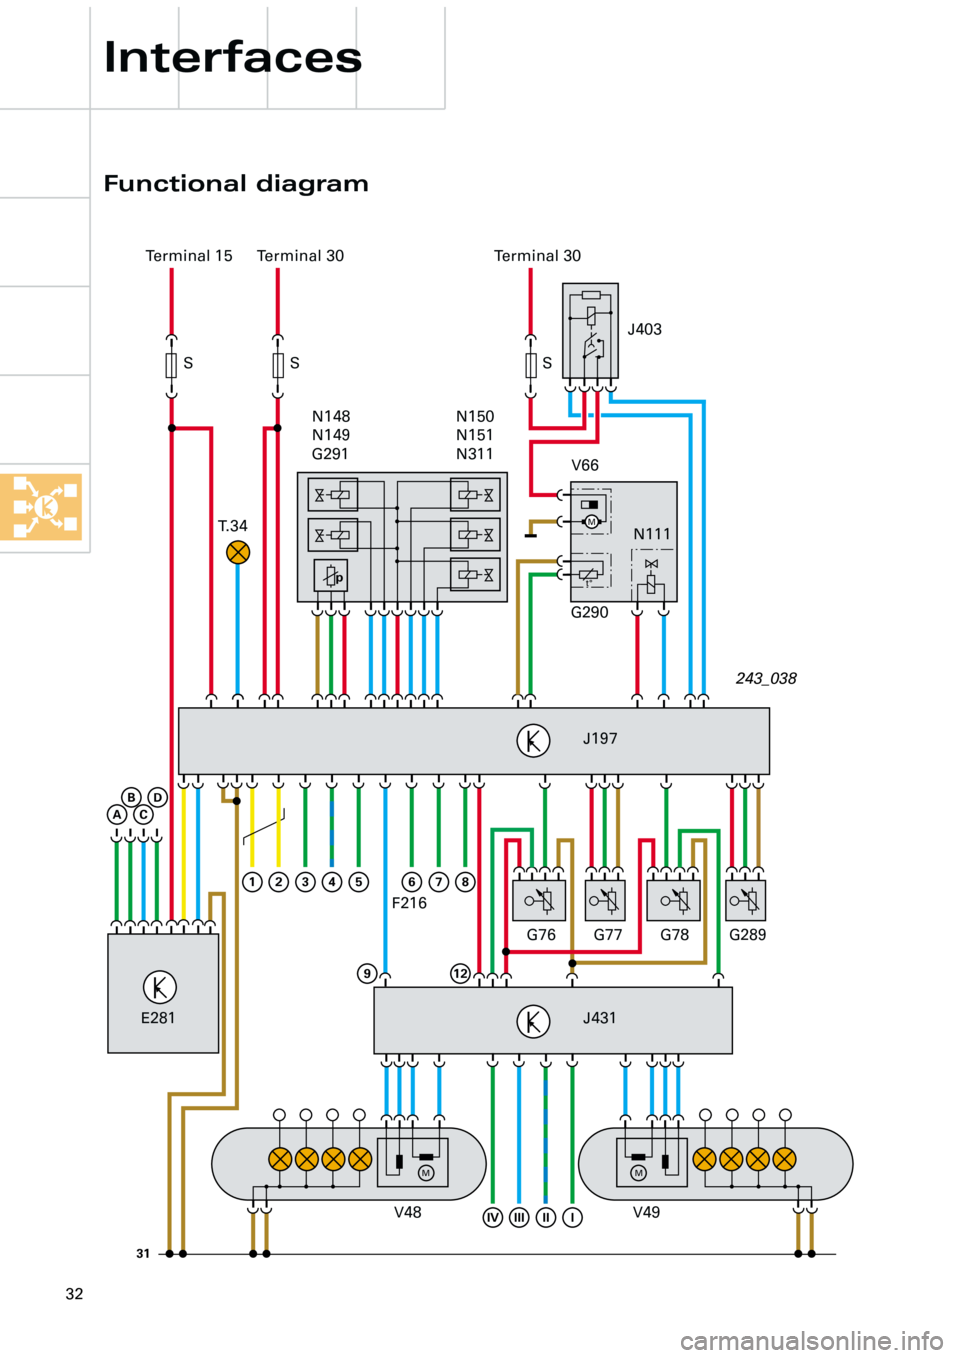 AUDI A6 ALLROAD 1999 C5 / 2.G Pneumatic Suspension System 32
Interfaces
pt° M
1
A
B
C
D
234
IVIIIIII
567
912
8
MM
31
Functional diagram
Terminal 15 Terminal 30
T. 3 4Terminal 30
S S S
N150
N151
N311 N148
N149
G291
V66
G290N111
J197
G76 G77 G78 G289
J431
V48